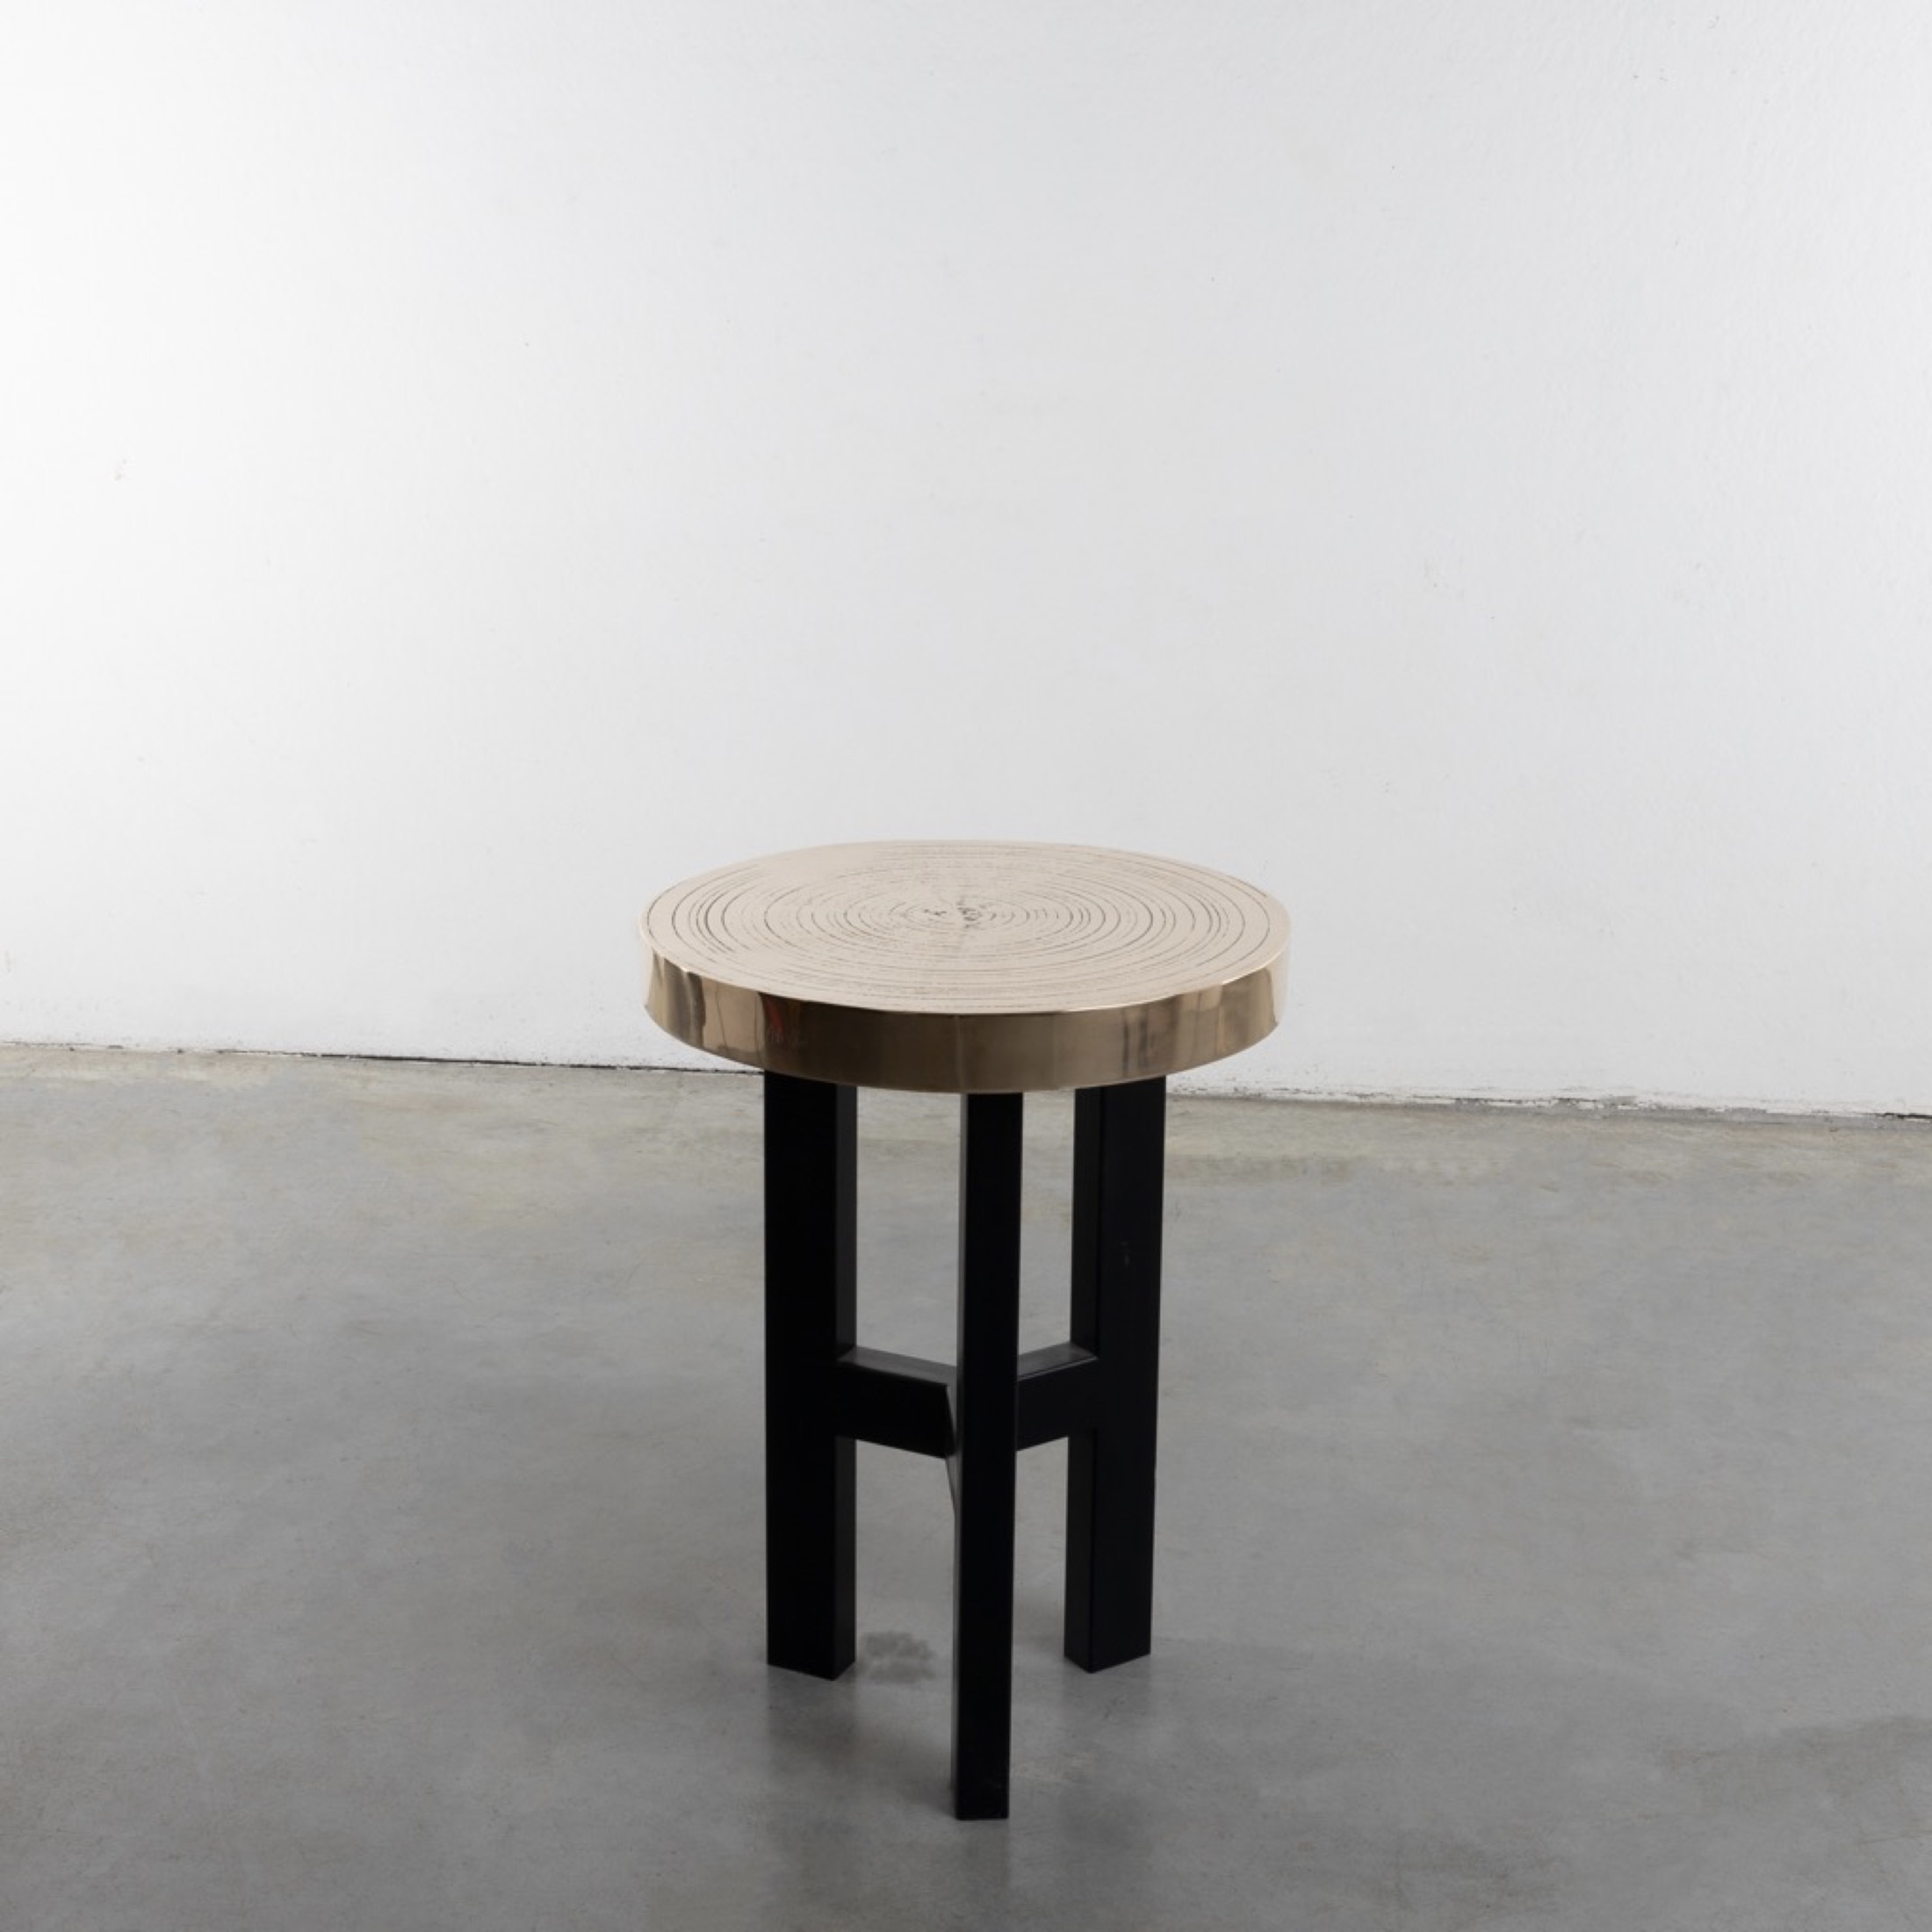 Goutte d'eau (teardrop) by Ado Chale - Pair of high tables or pedestal tables in cast bronze